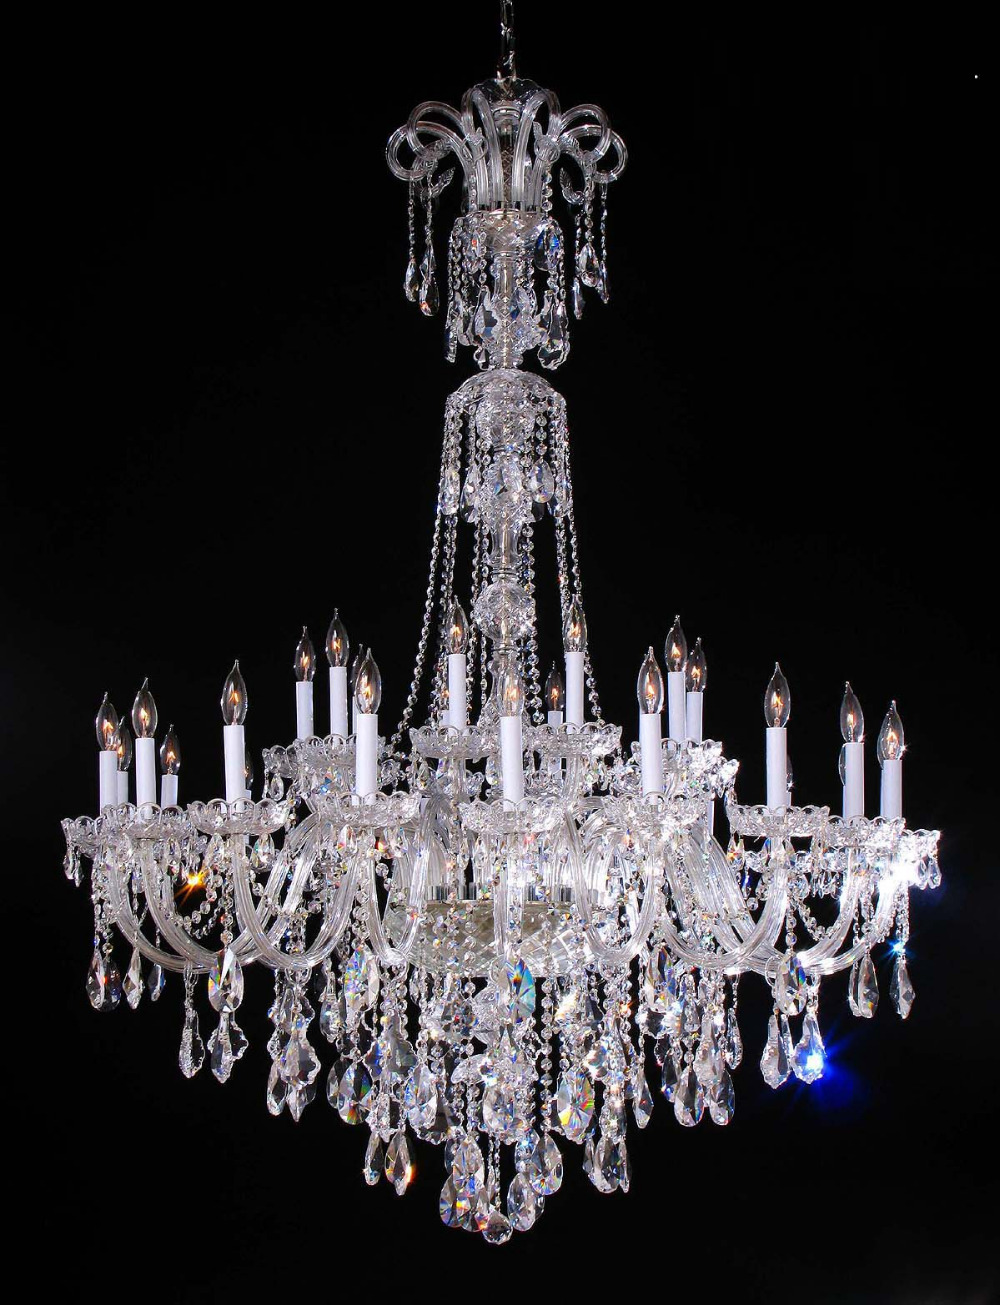 modern crystal chandelier 5 star el crystal chandelier parts led crystal candle chandeliers large elegant crystal chandelier